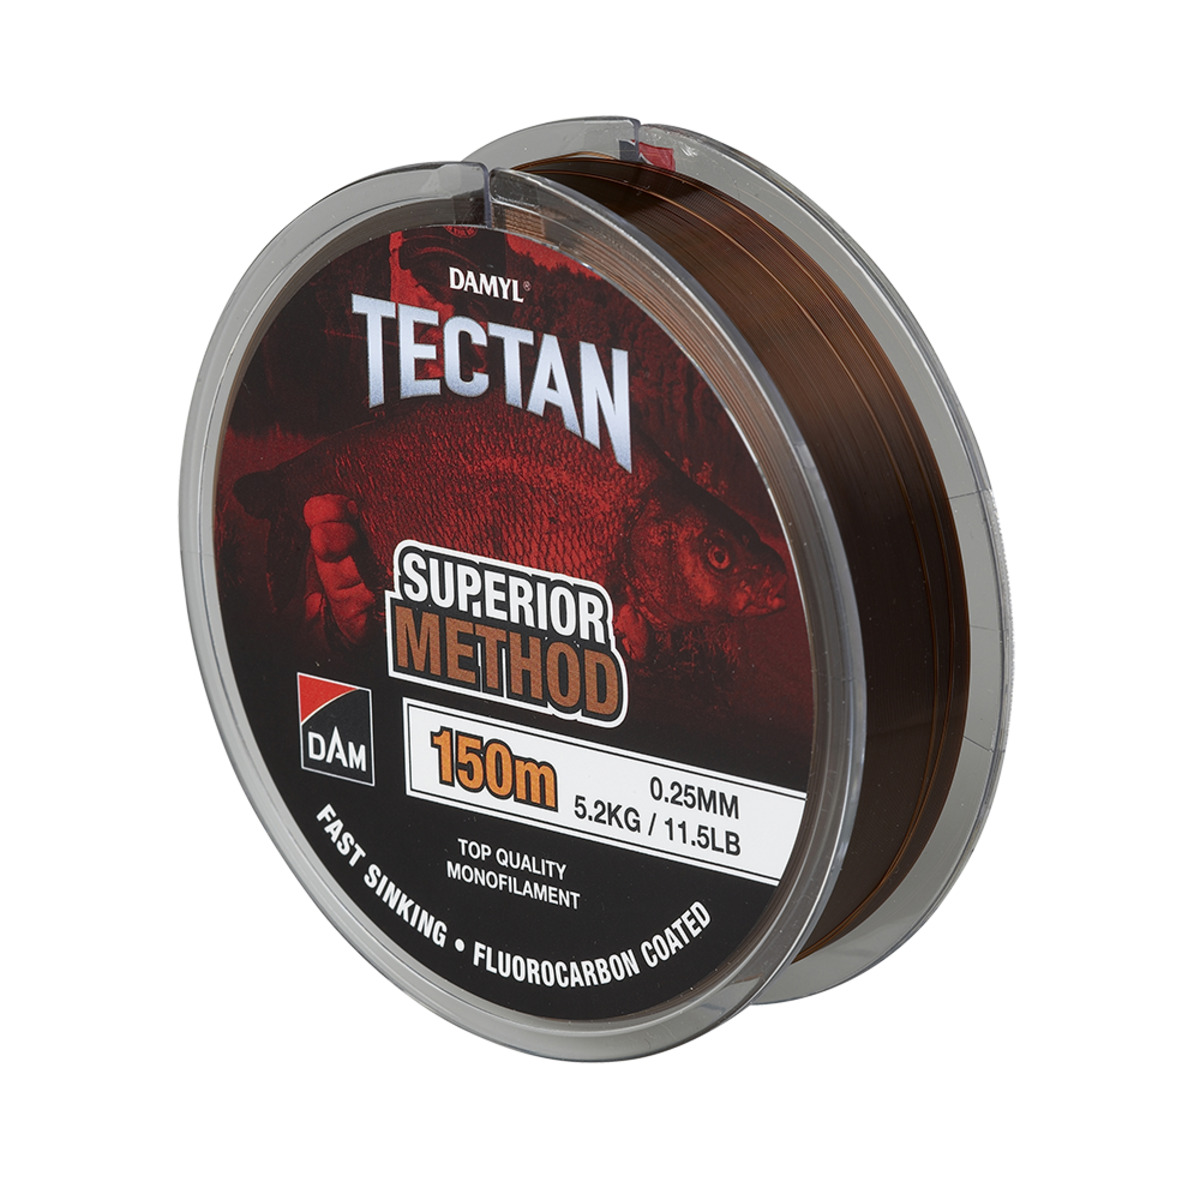 Dam Tectan Superior Fcc Method 150m - 0.18MM 2.7KG 6LBS BROWN